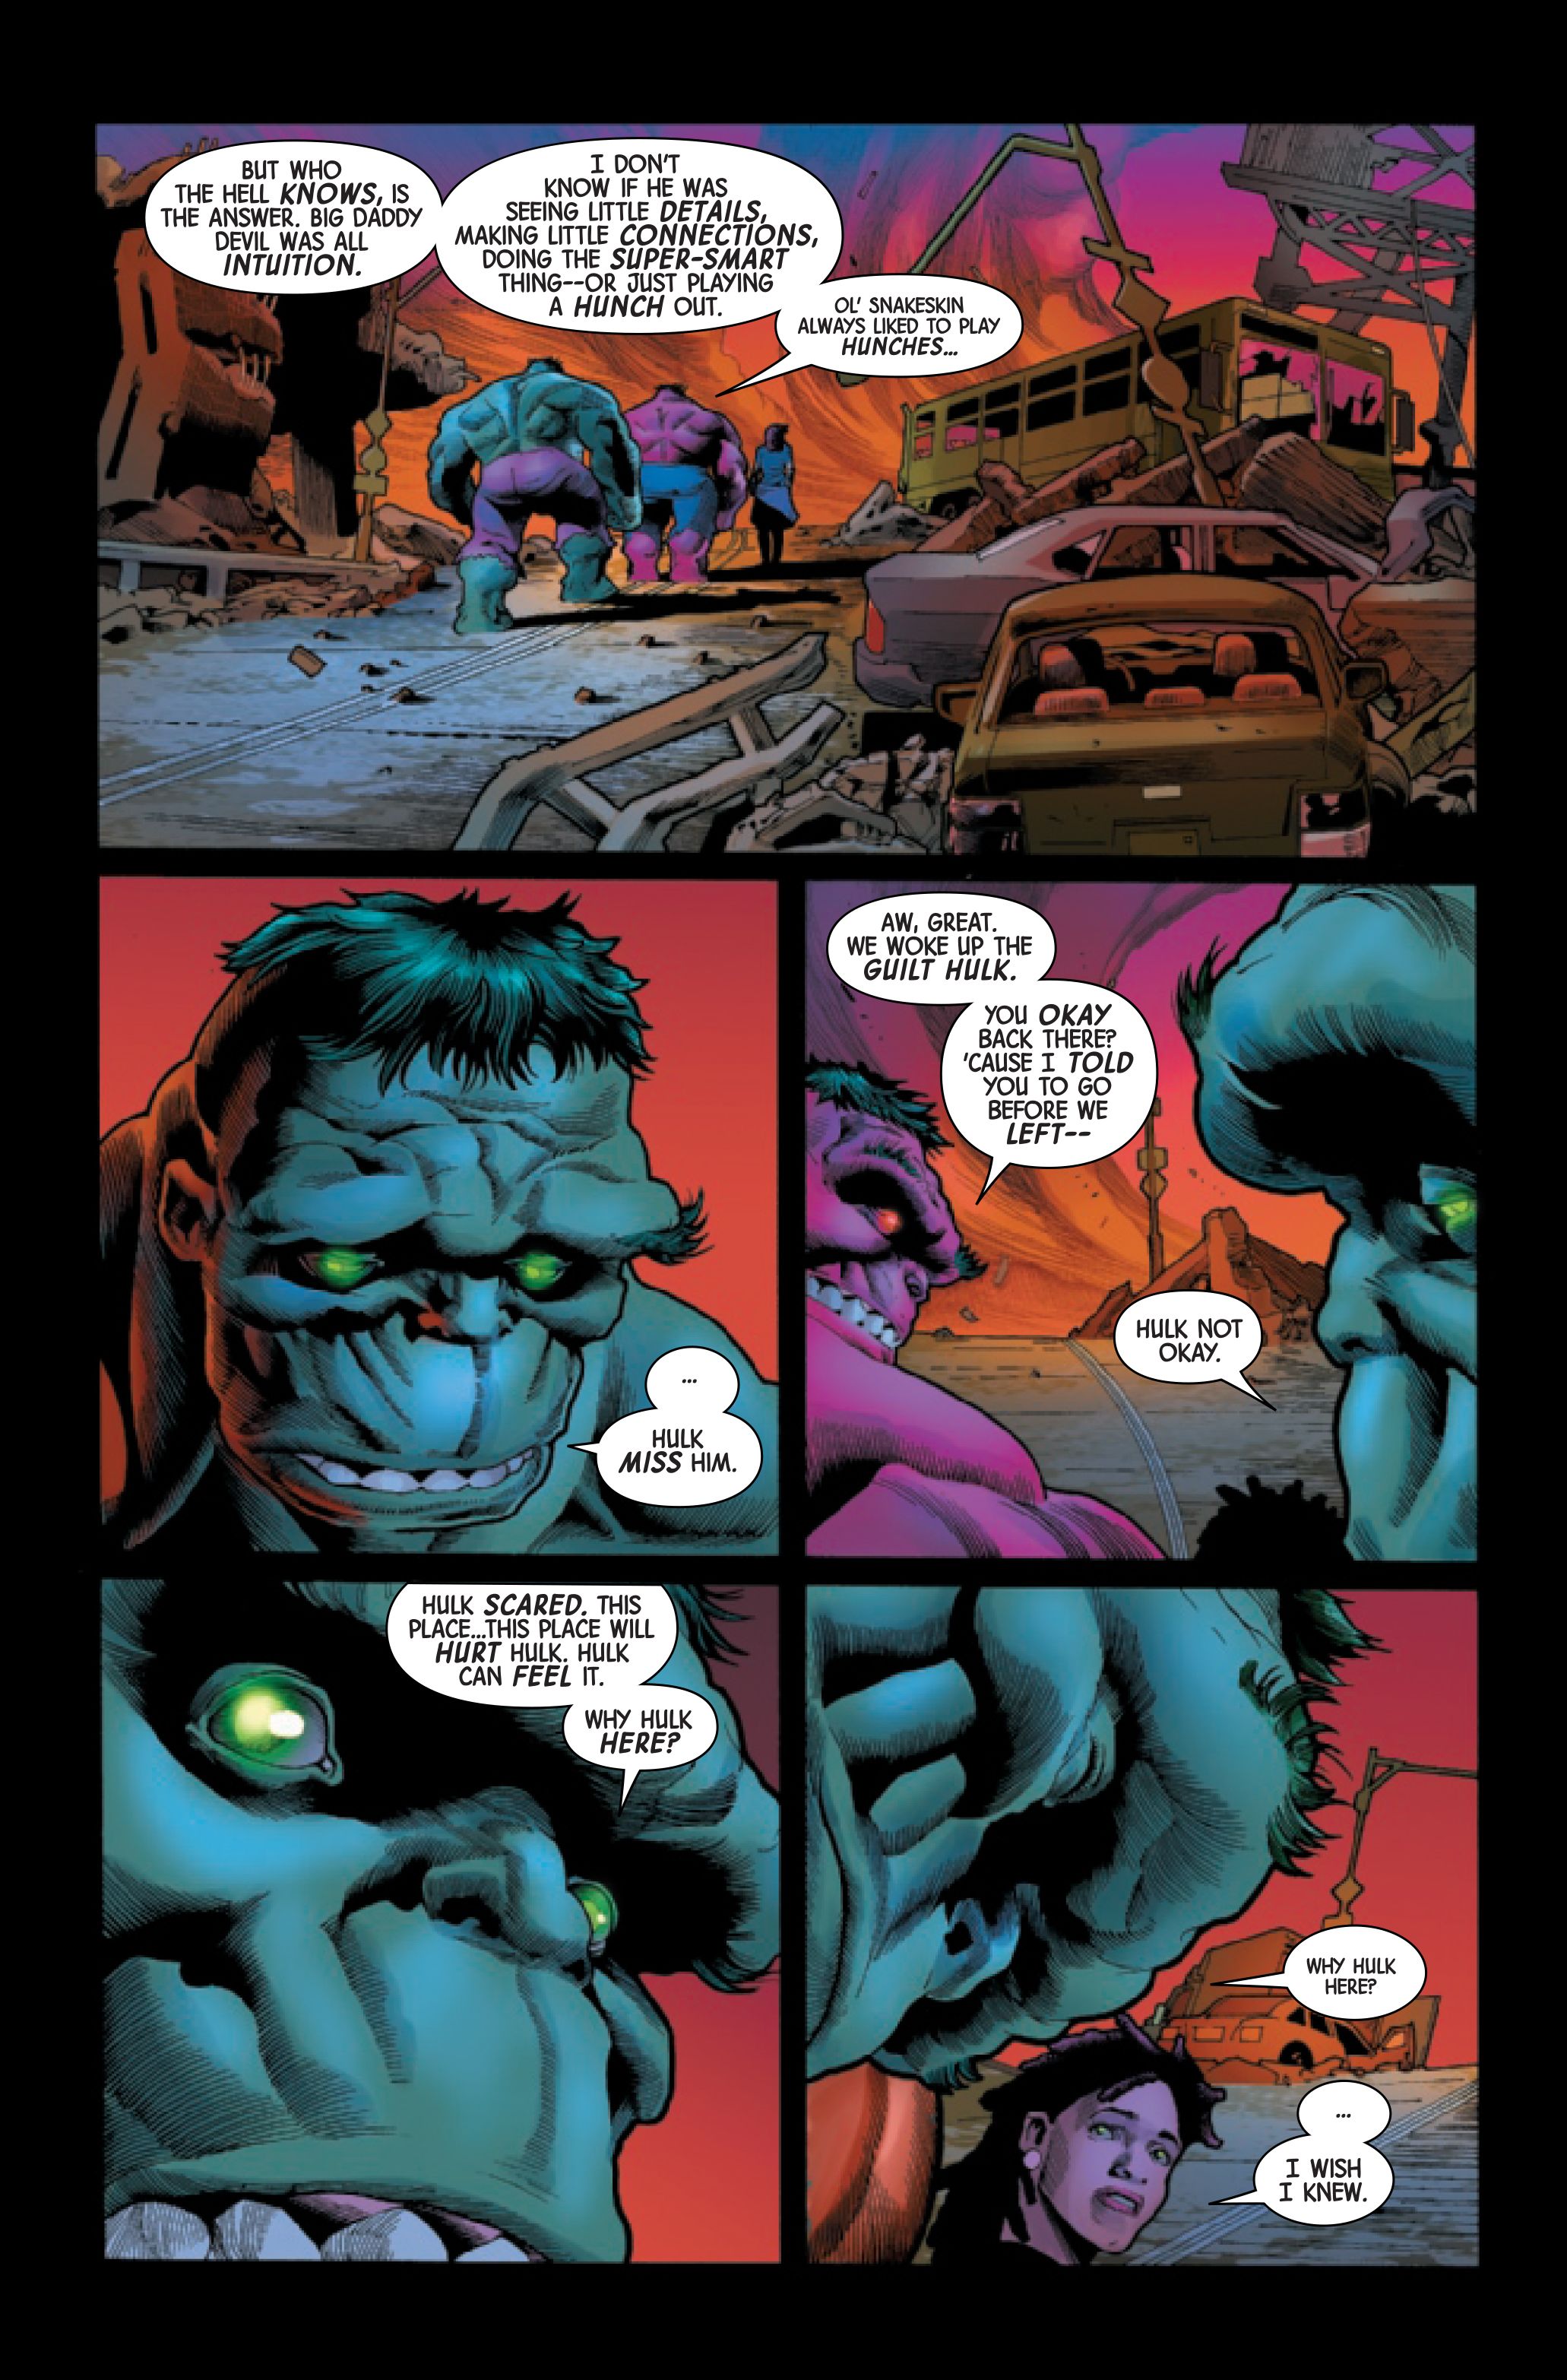 Page 3 of Hulk #50, by Al Ewing and Joe Bennett.